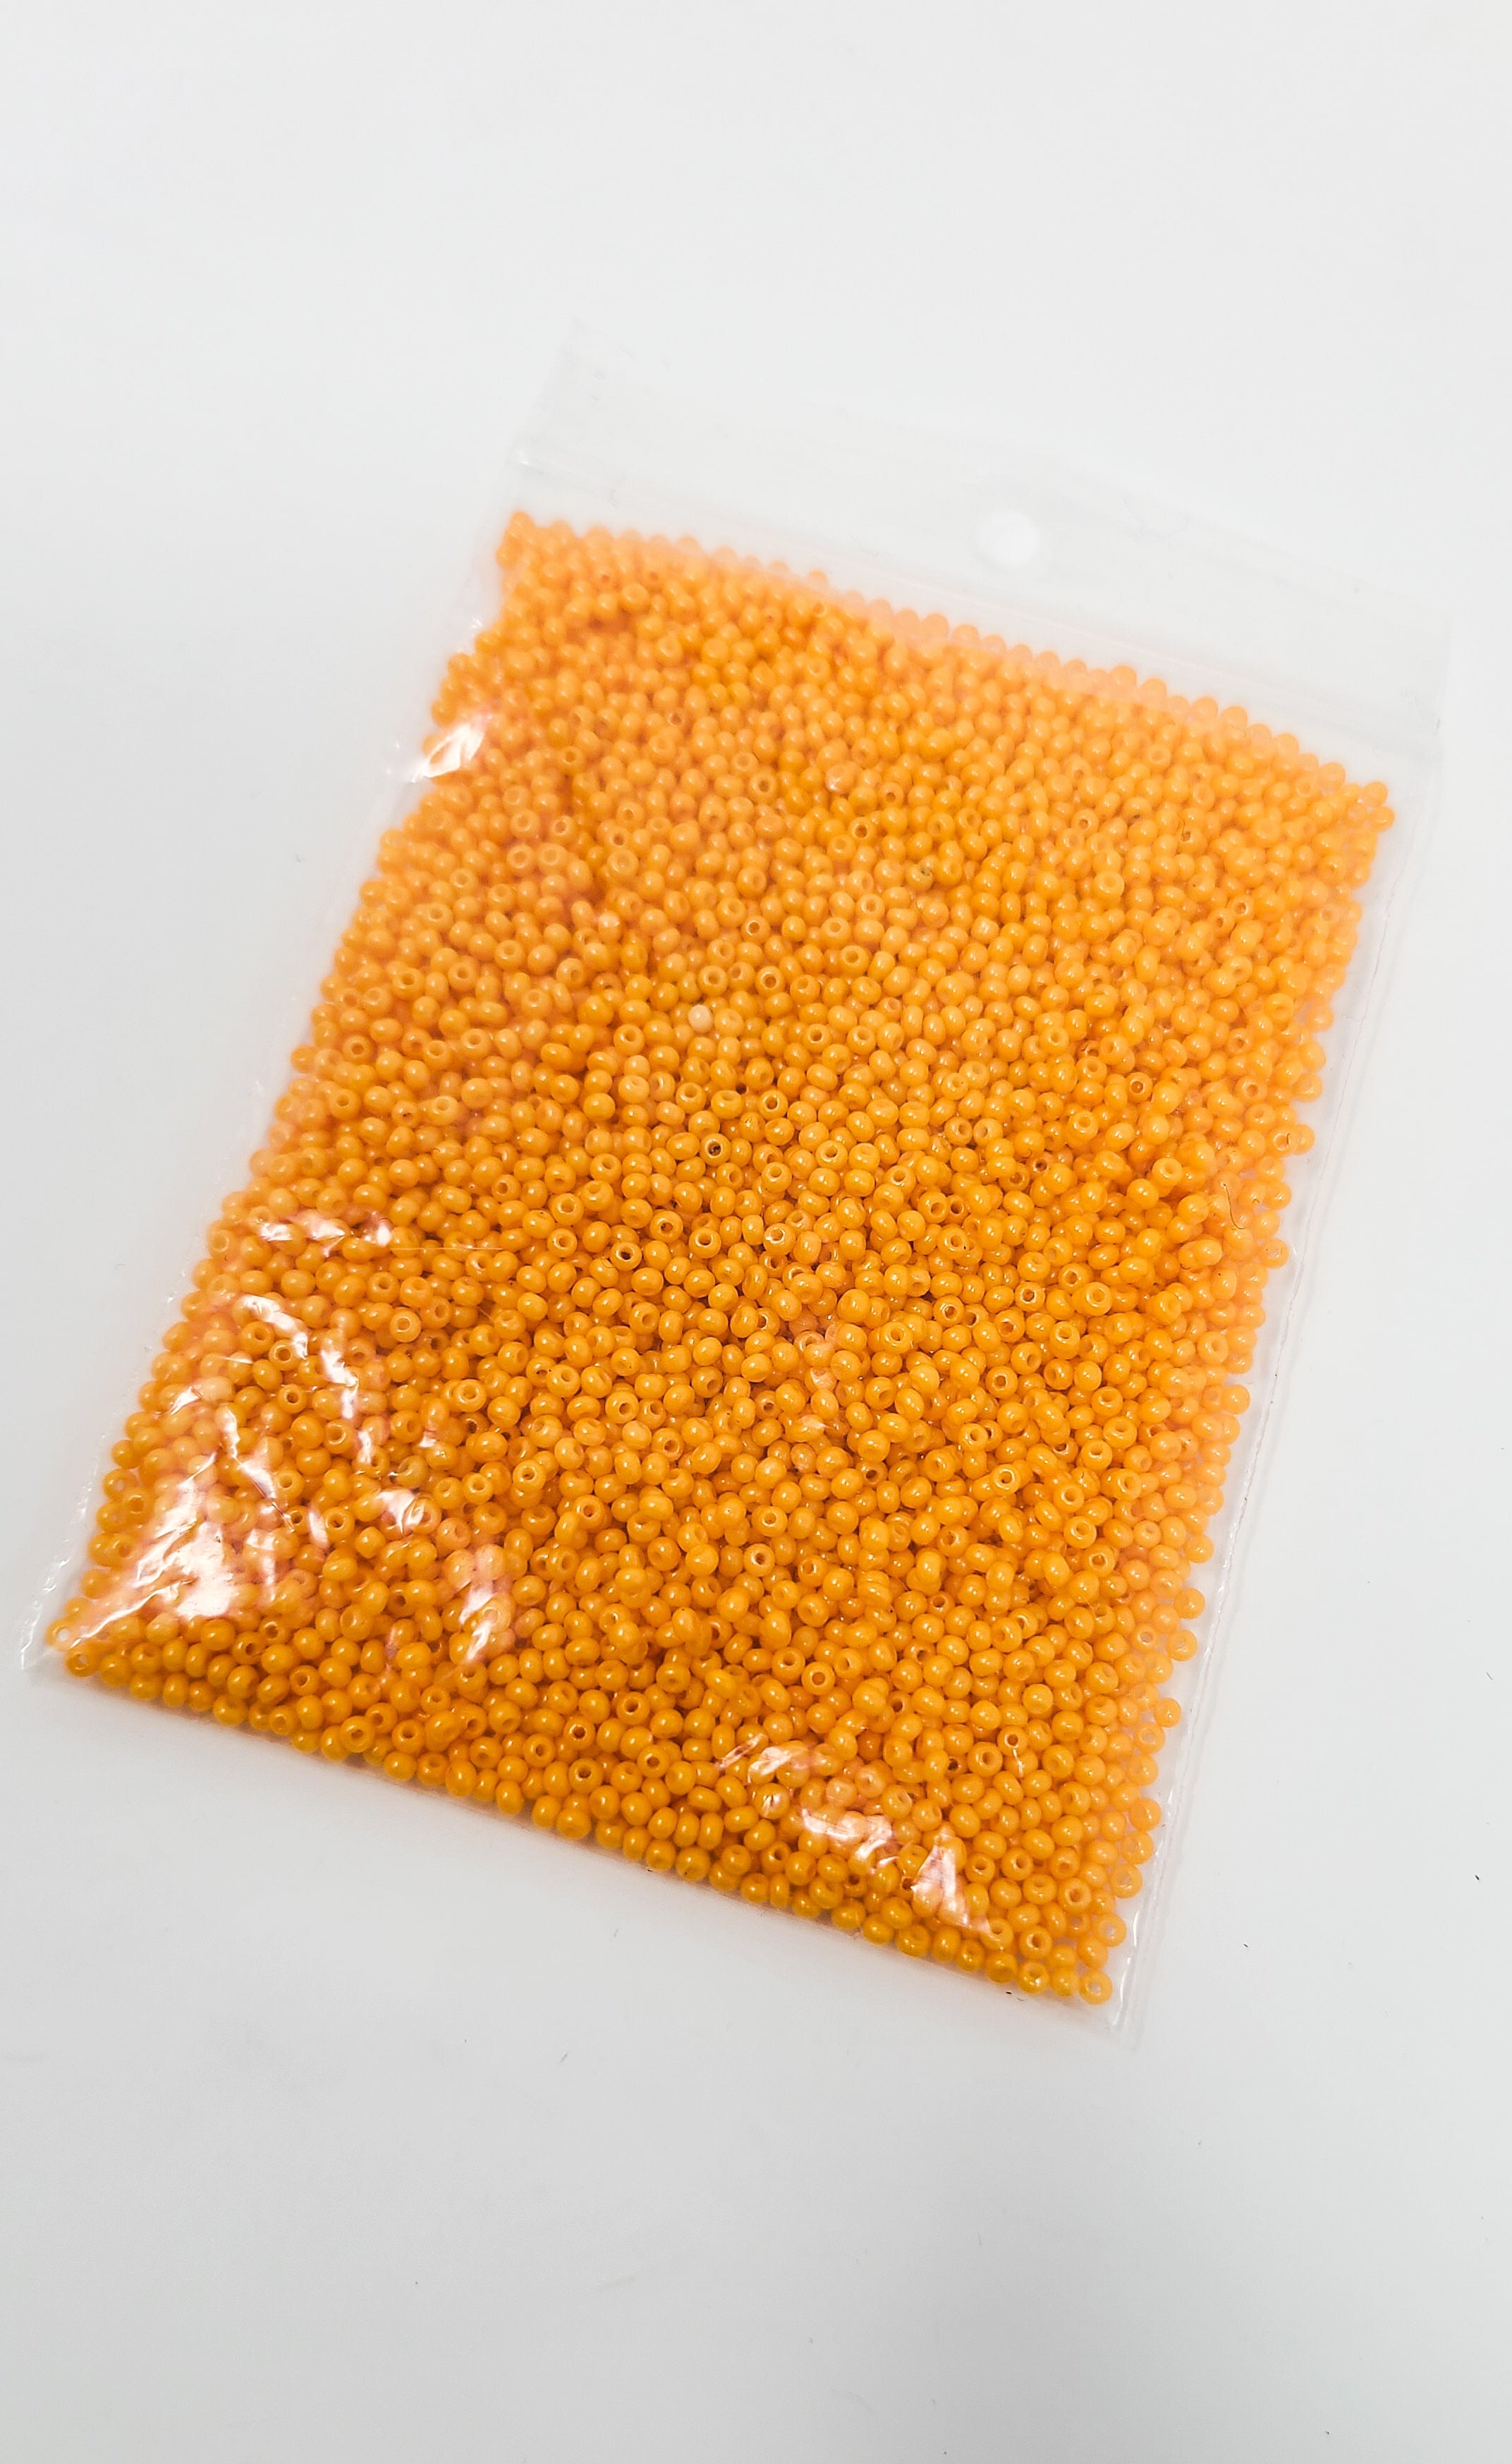 Glass Beads - Orange